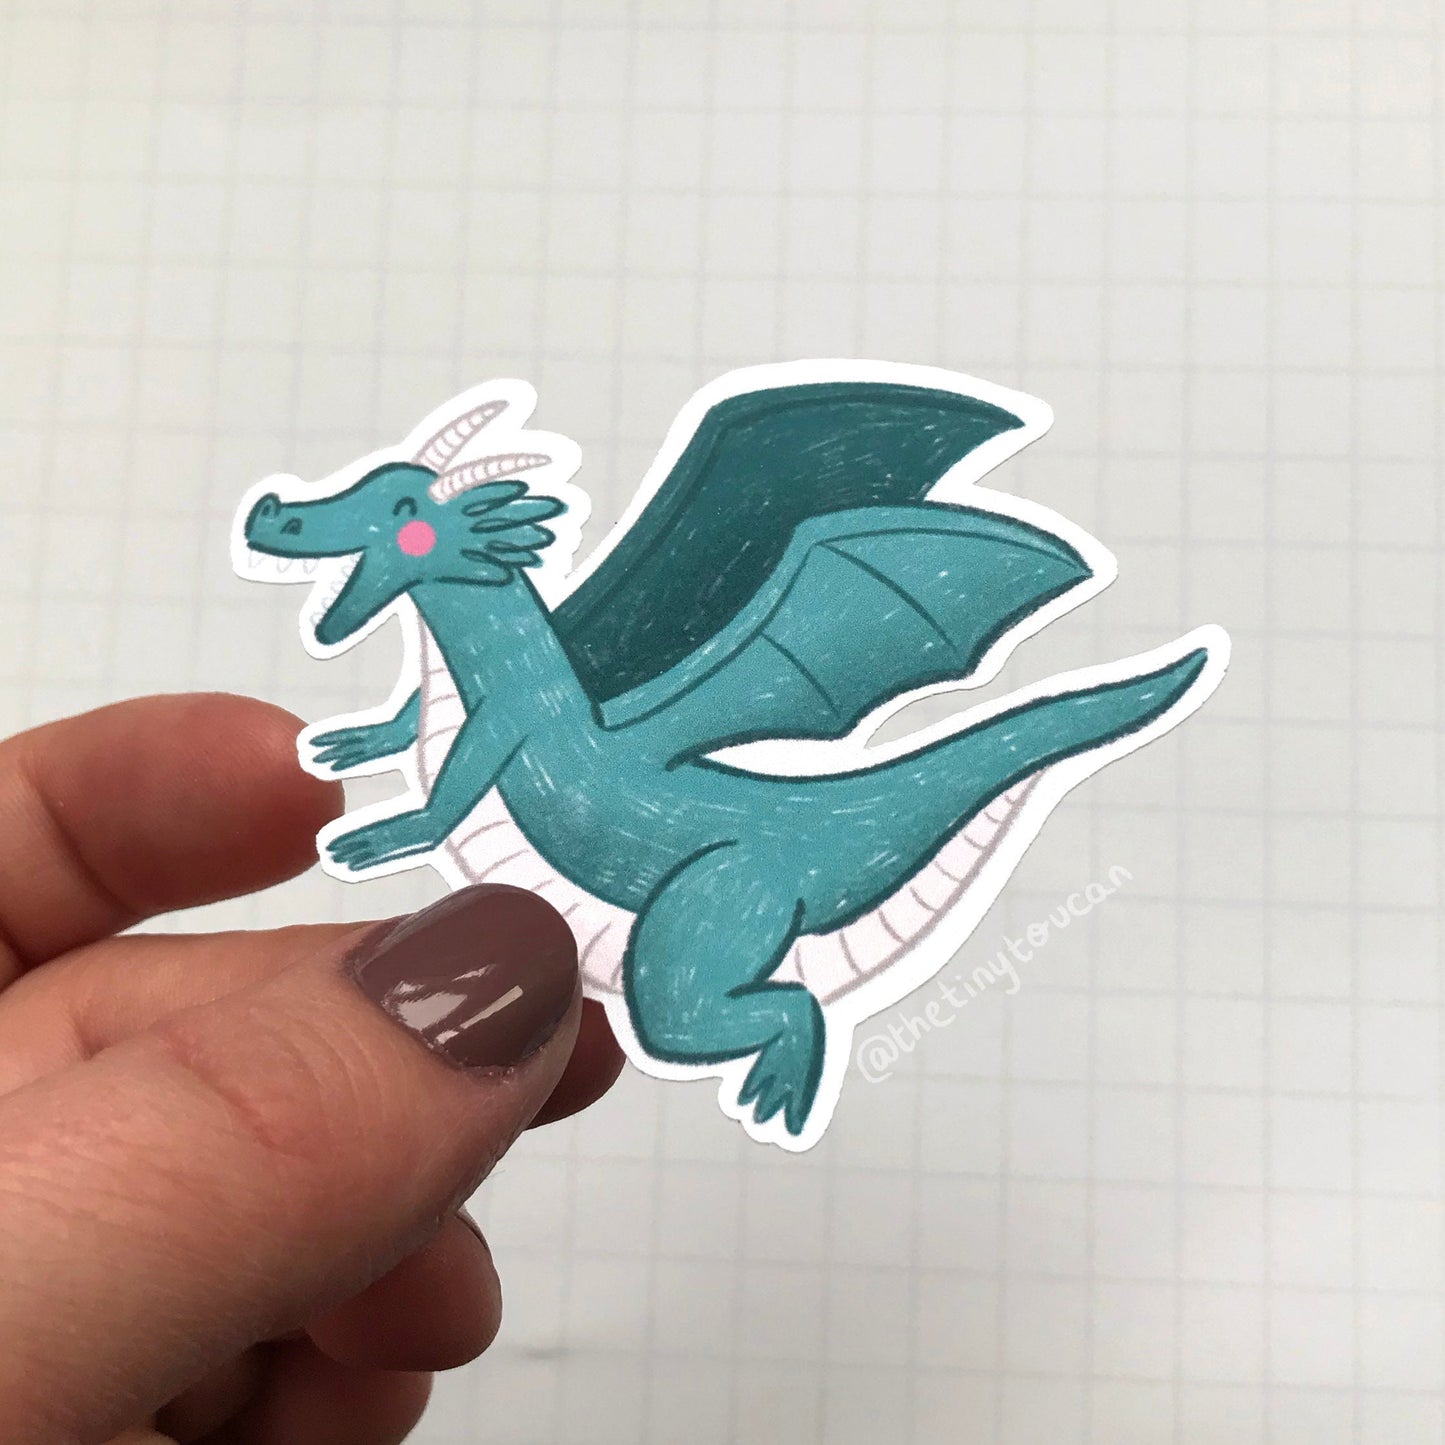 Magical Friends Sticker Pack!  (Unicorn, Princess, Frog, Flowers, Dragon, Swan sticker pack, tech stickers, laptop sticker, cute)